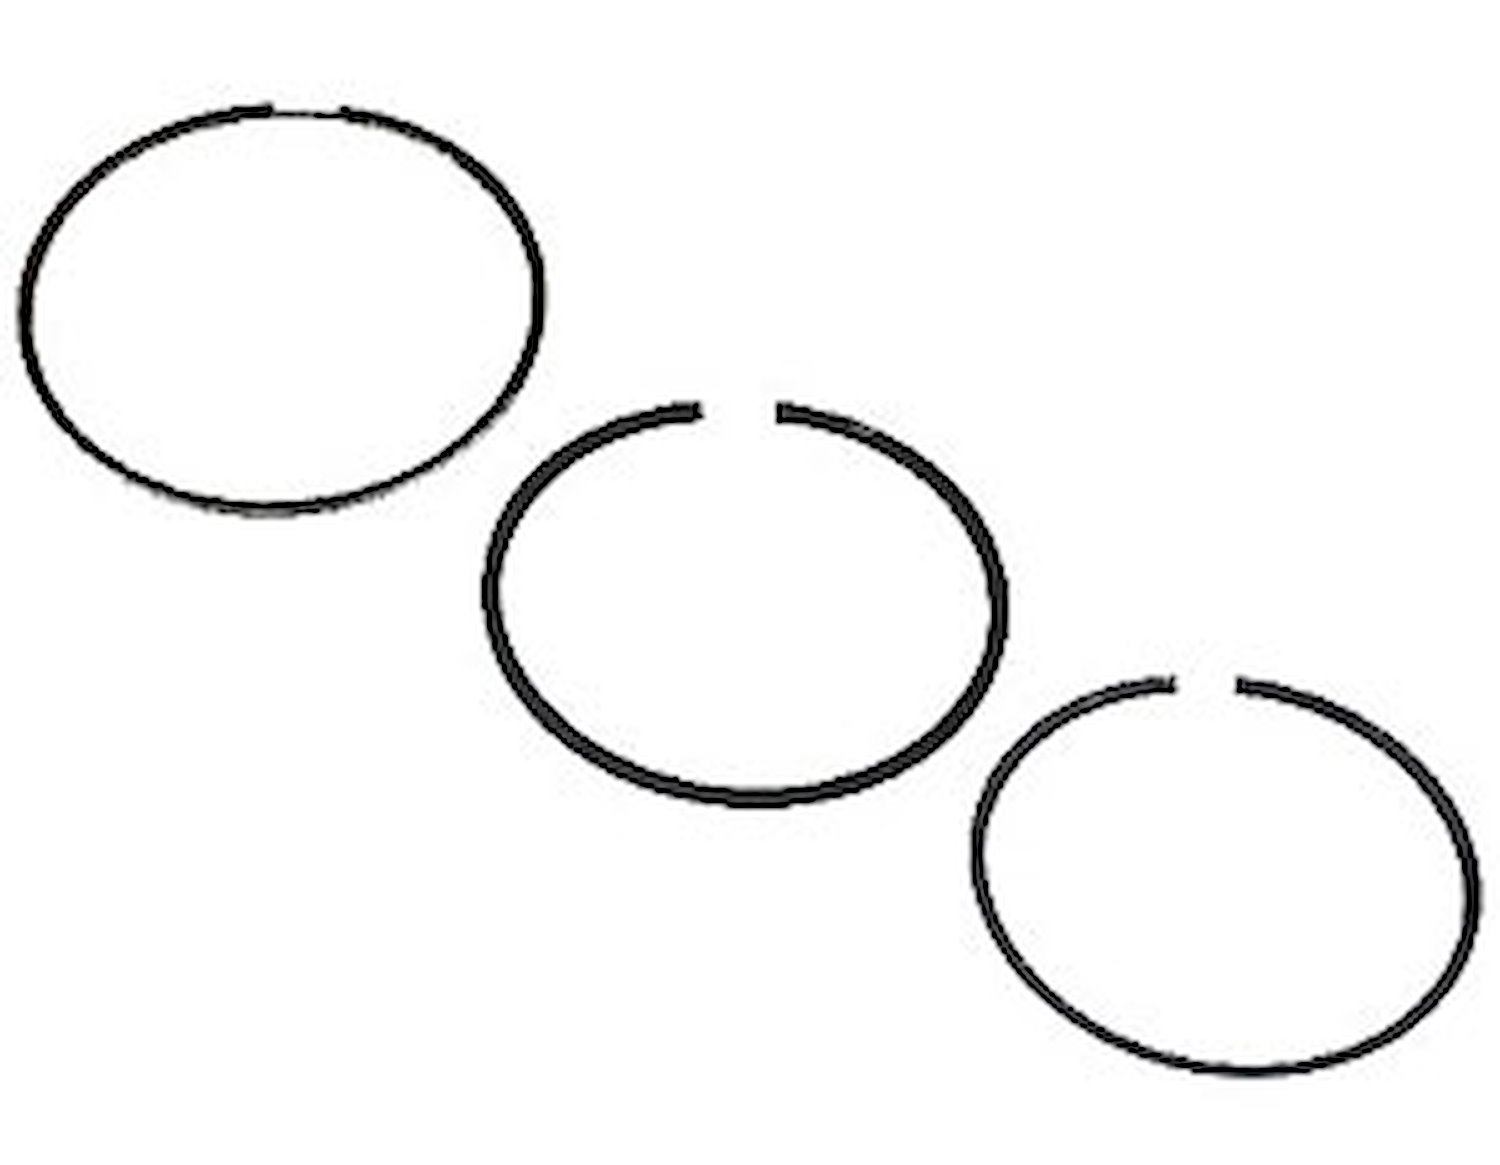 Standard Tension Piston Ring Set Bore: 4.125"/File Fit: 4.130"